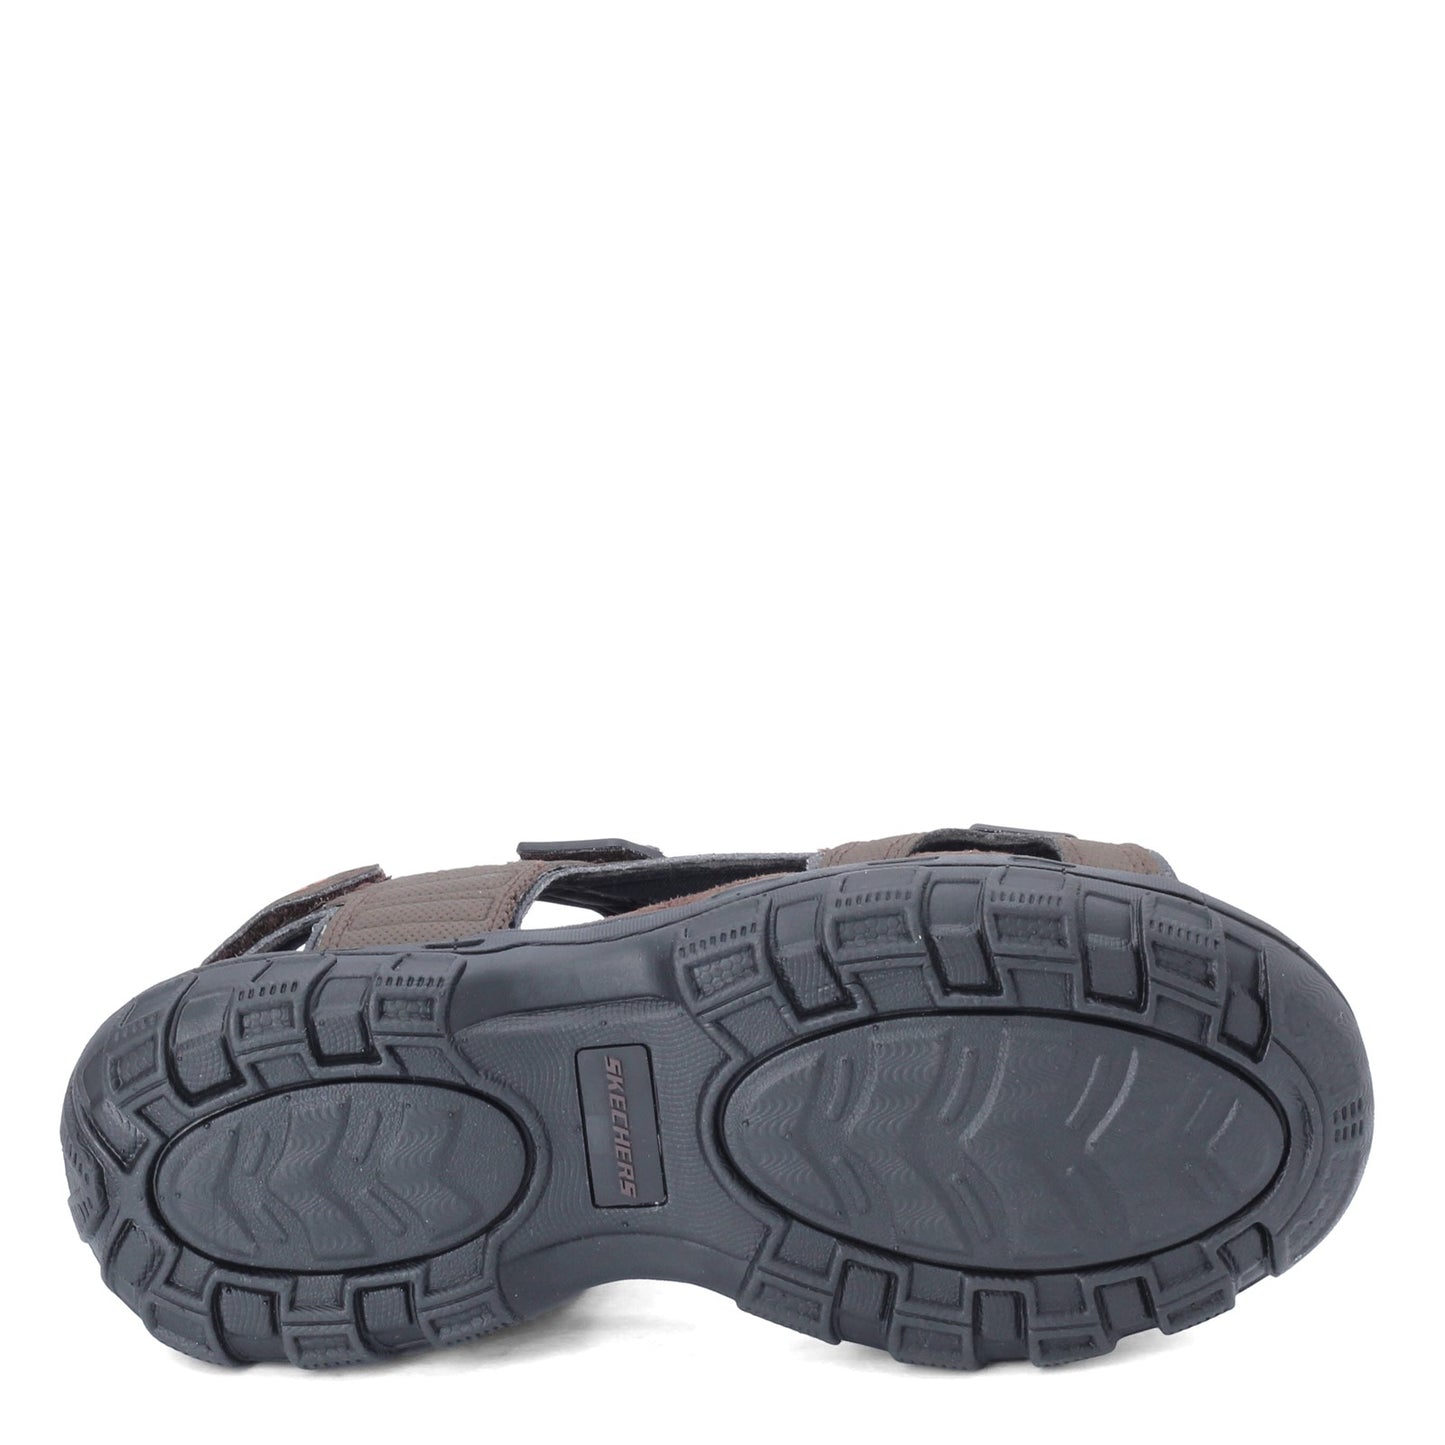 Peltz Shoes  Men's Skechers Relaxed Fit: Conner - Louden Sandal BROWN 64487-BRN